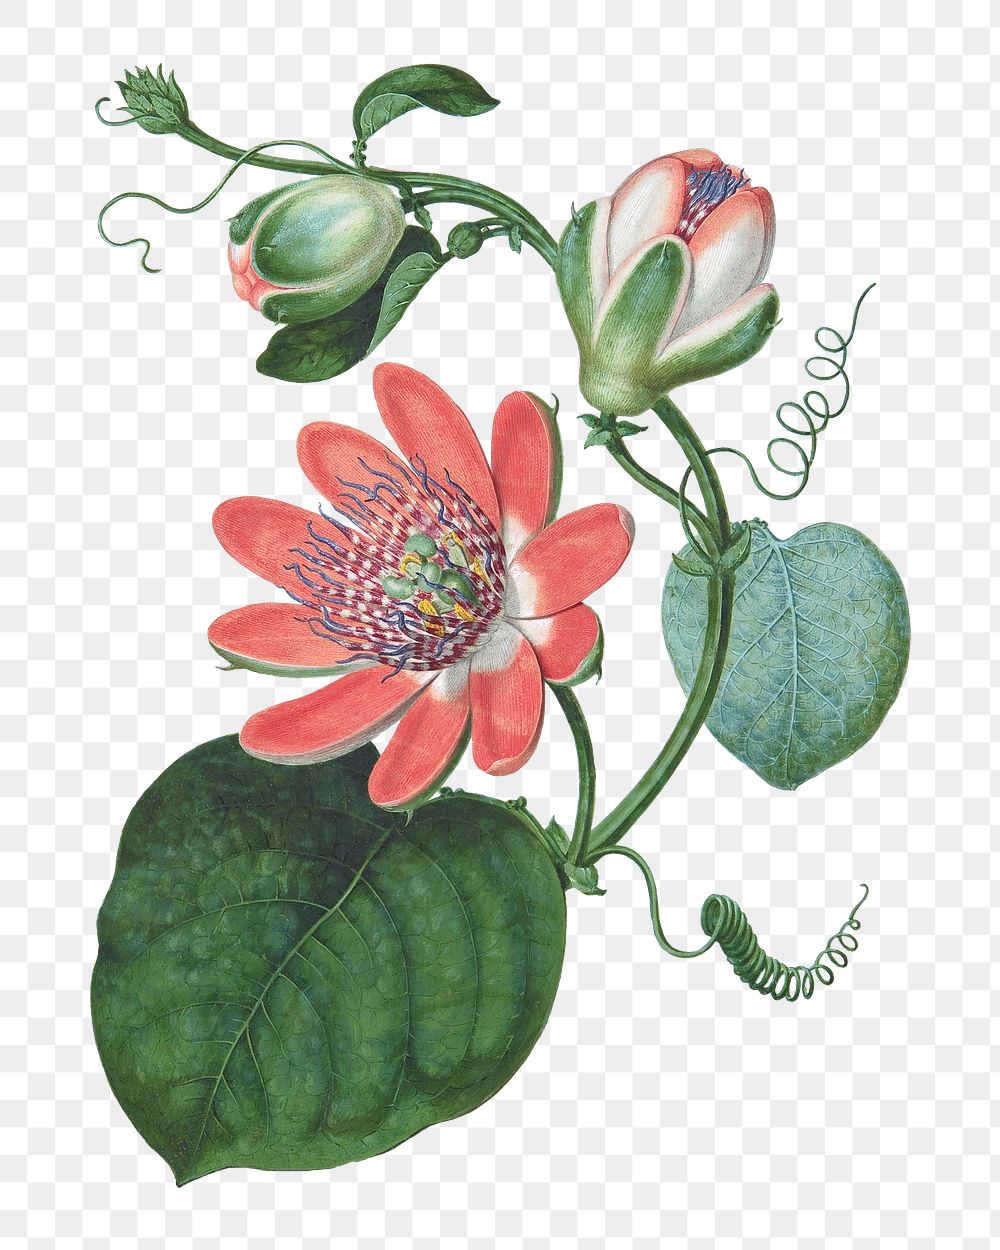 PNG Passion flower, vintage botanical illustration by Sydenham Teak Edwards, transparent background. Remixed by rawpixel.